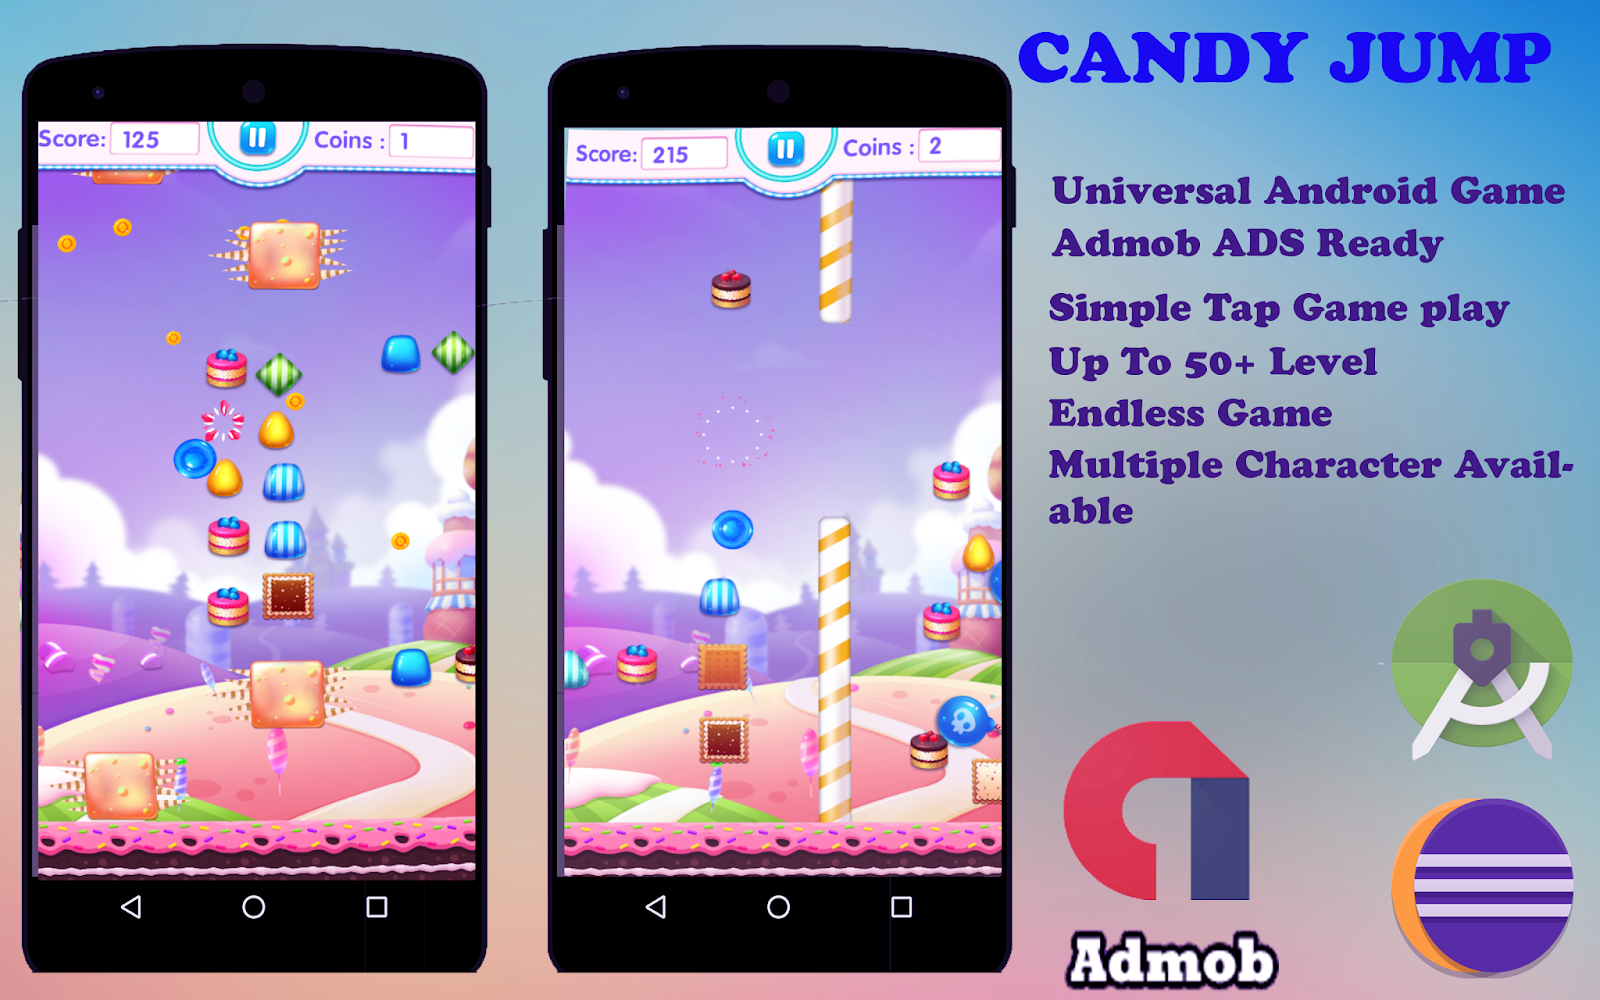 Android studio games. Android Studio игры. Примеры игр в андроид студио. Android Studio game activity. Студия игр Blue Android.